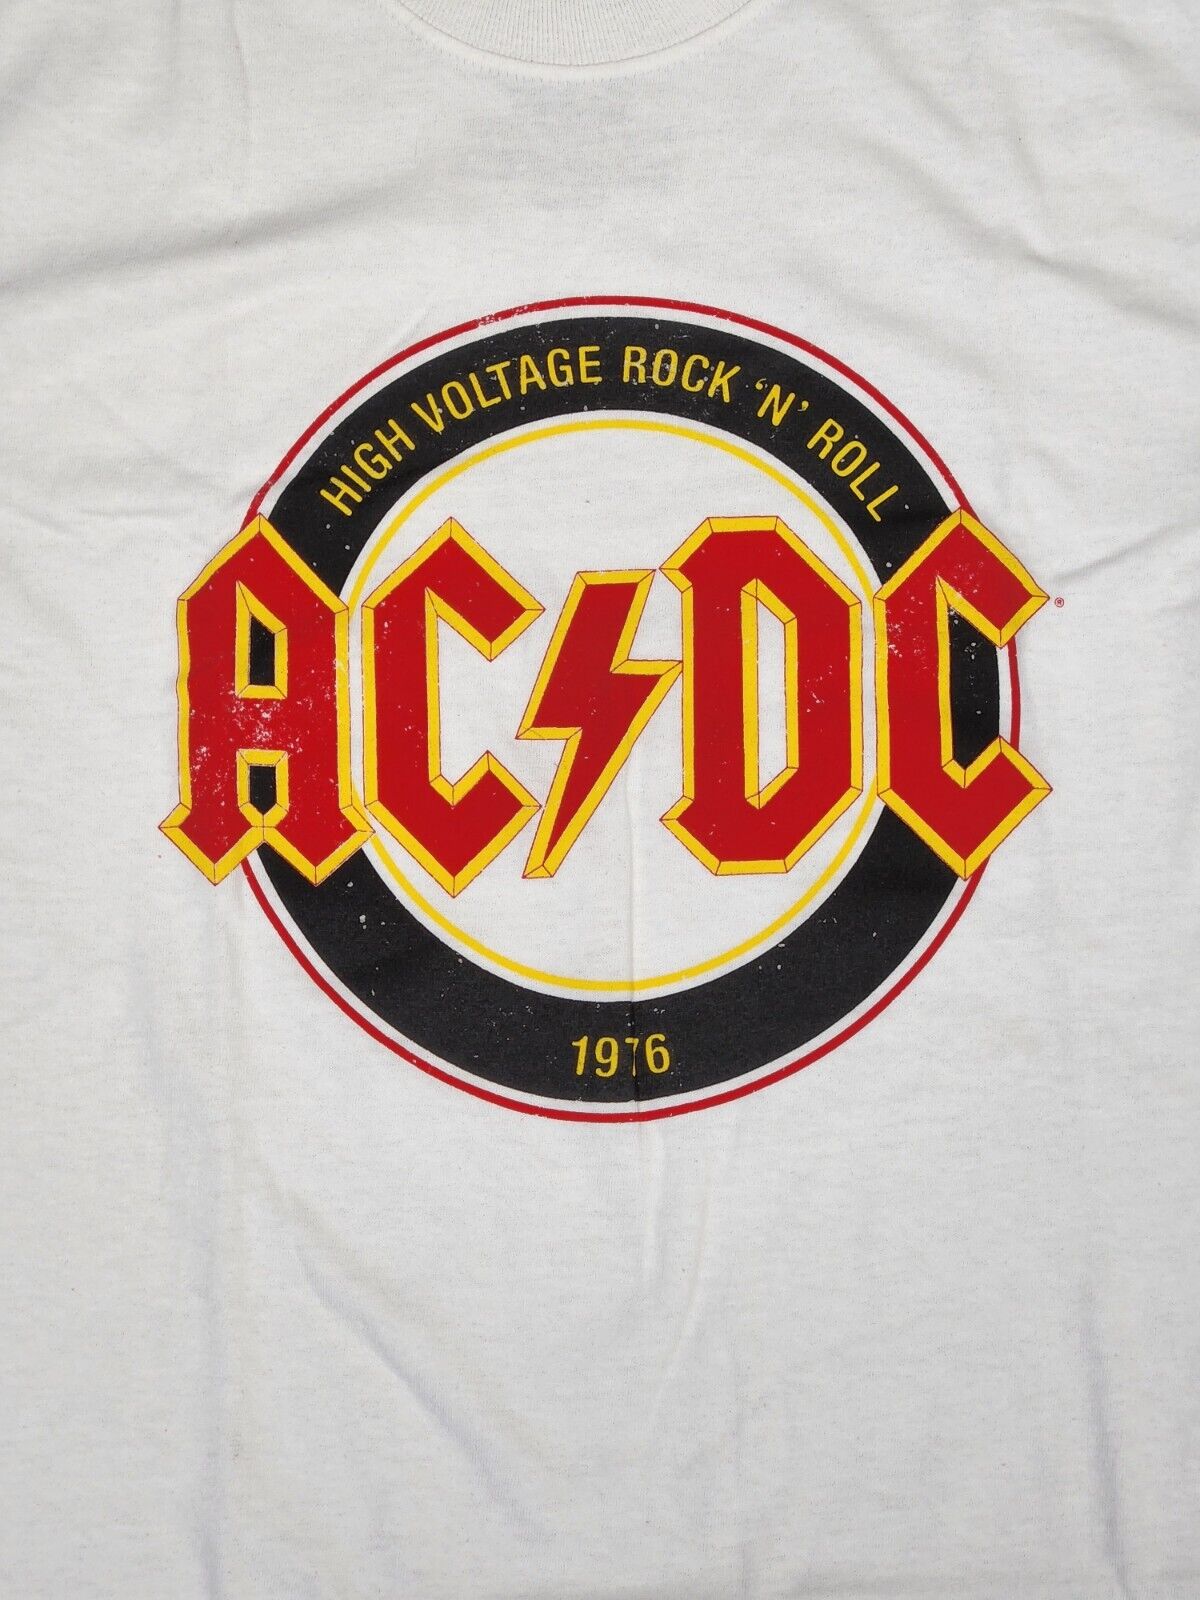 AC/DC Band T-Shirt - High Voltage Rock N' Roll 1976 - White - Men's/Unisex